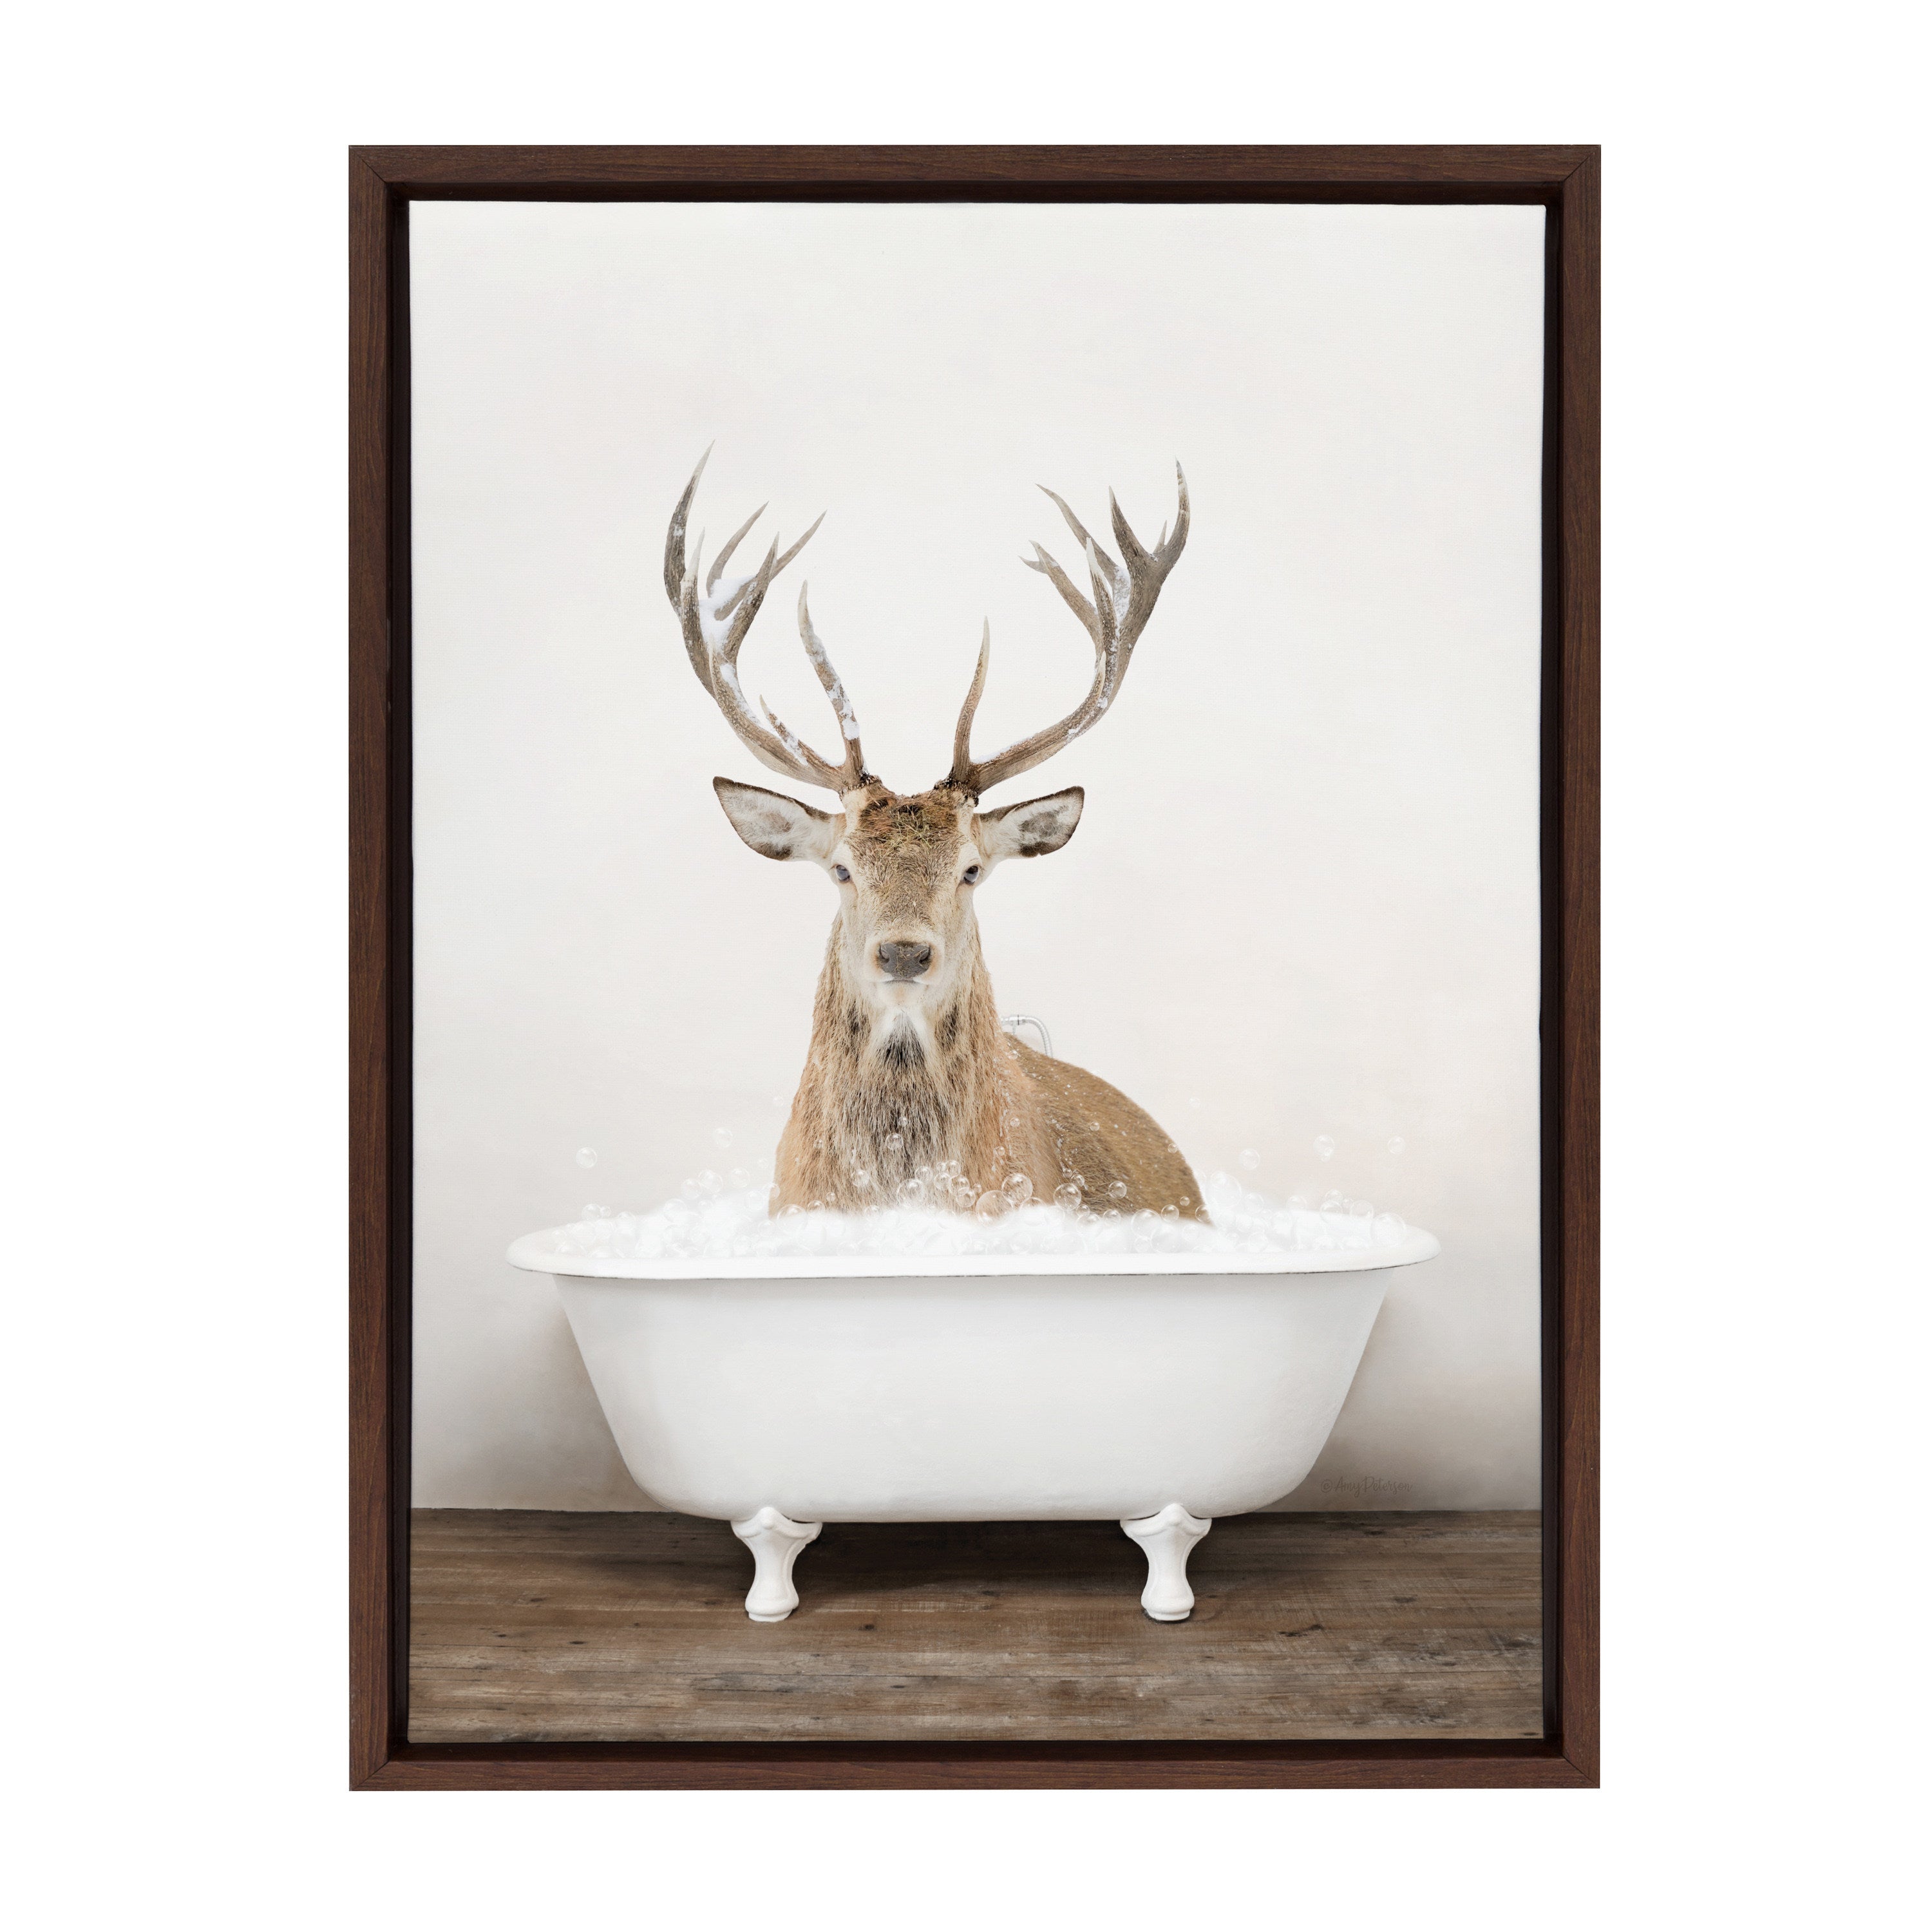 Sylvie Male Deer in Rustic Bath Framed Canvas by Amy Peterson Art Studio